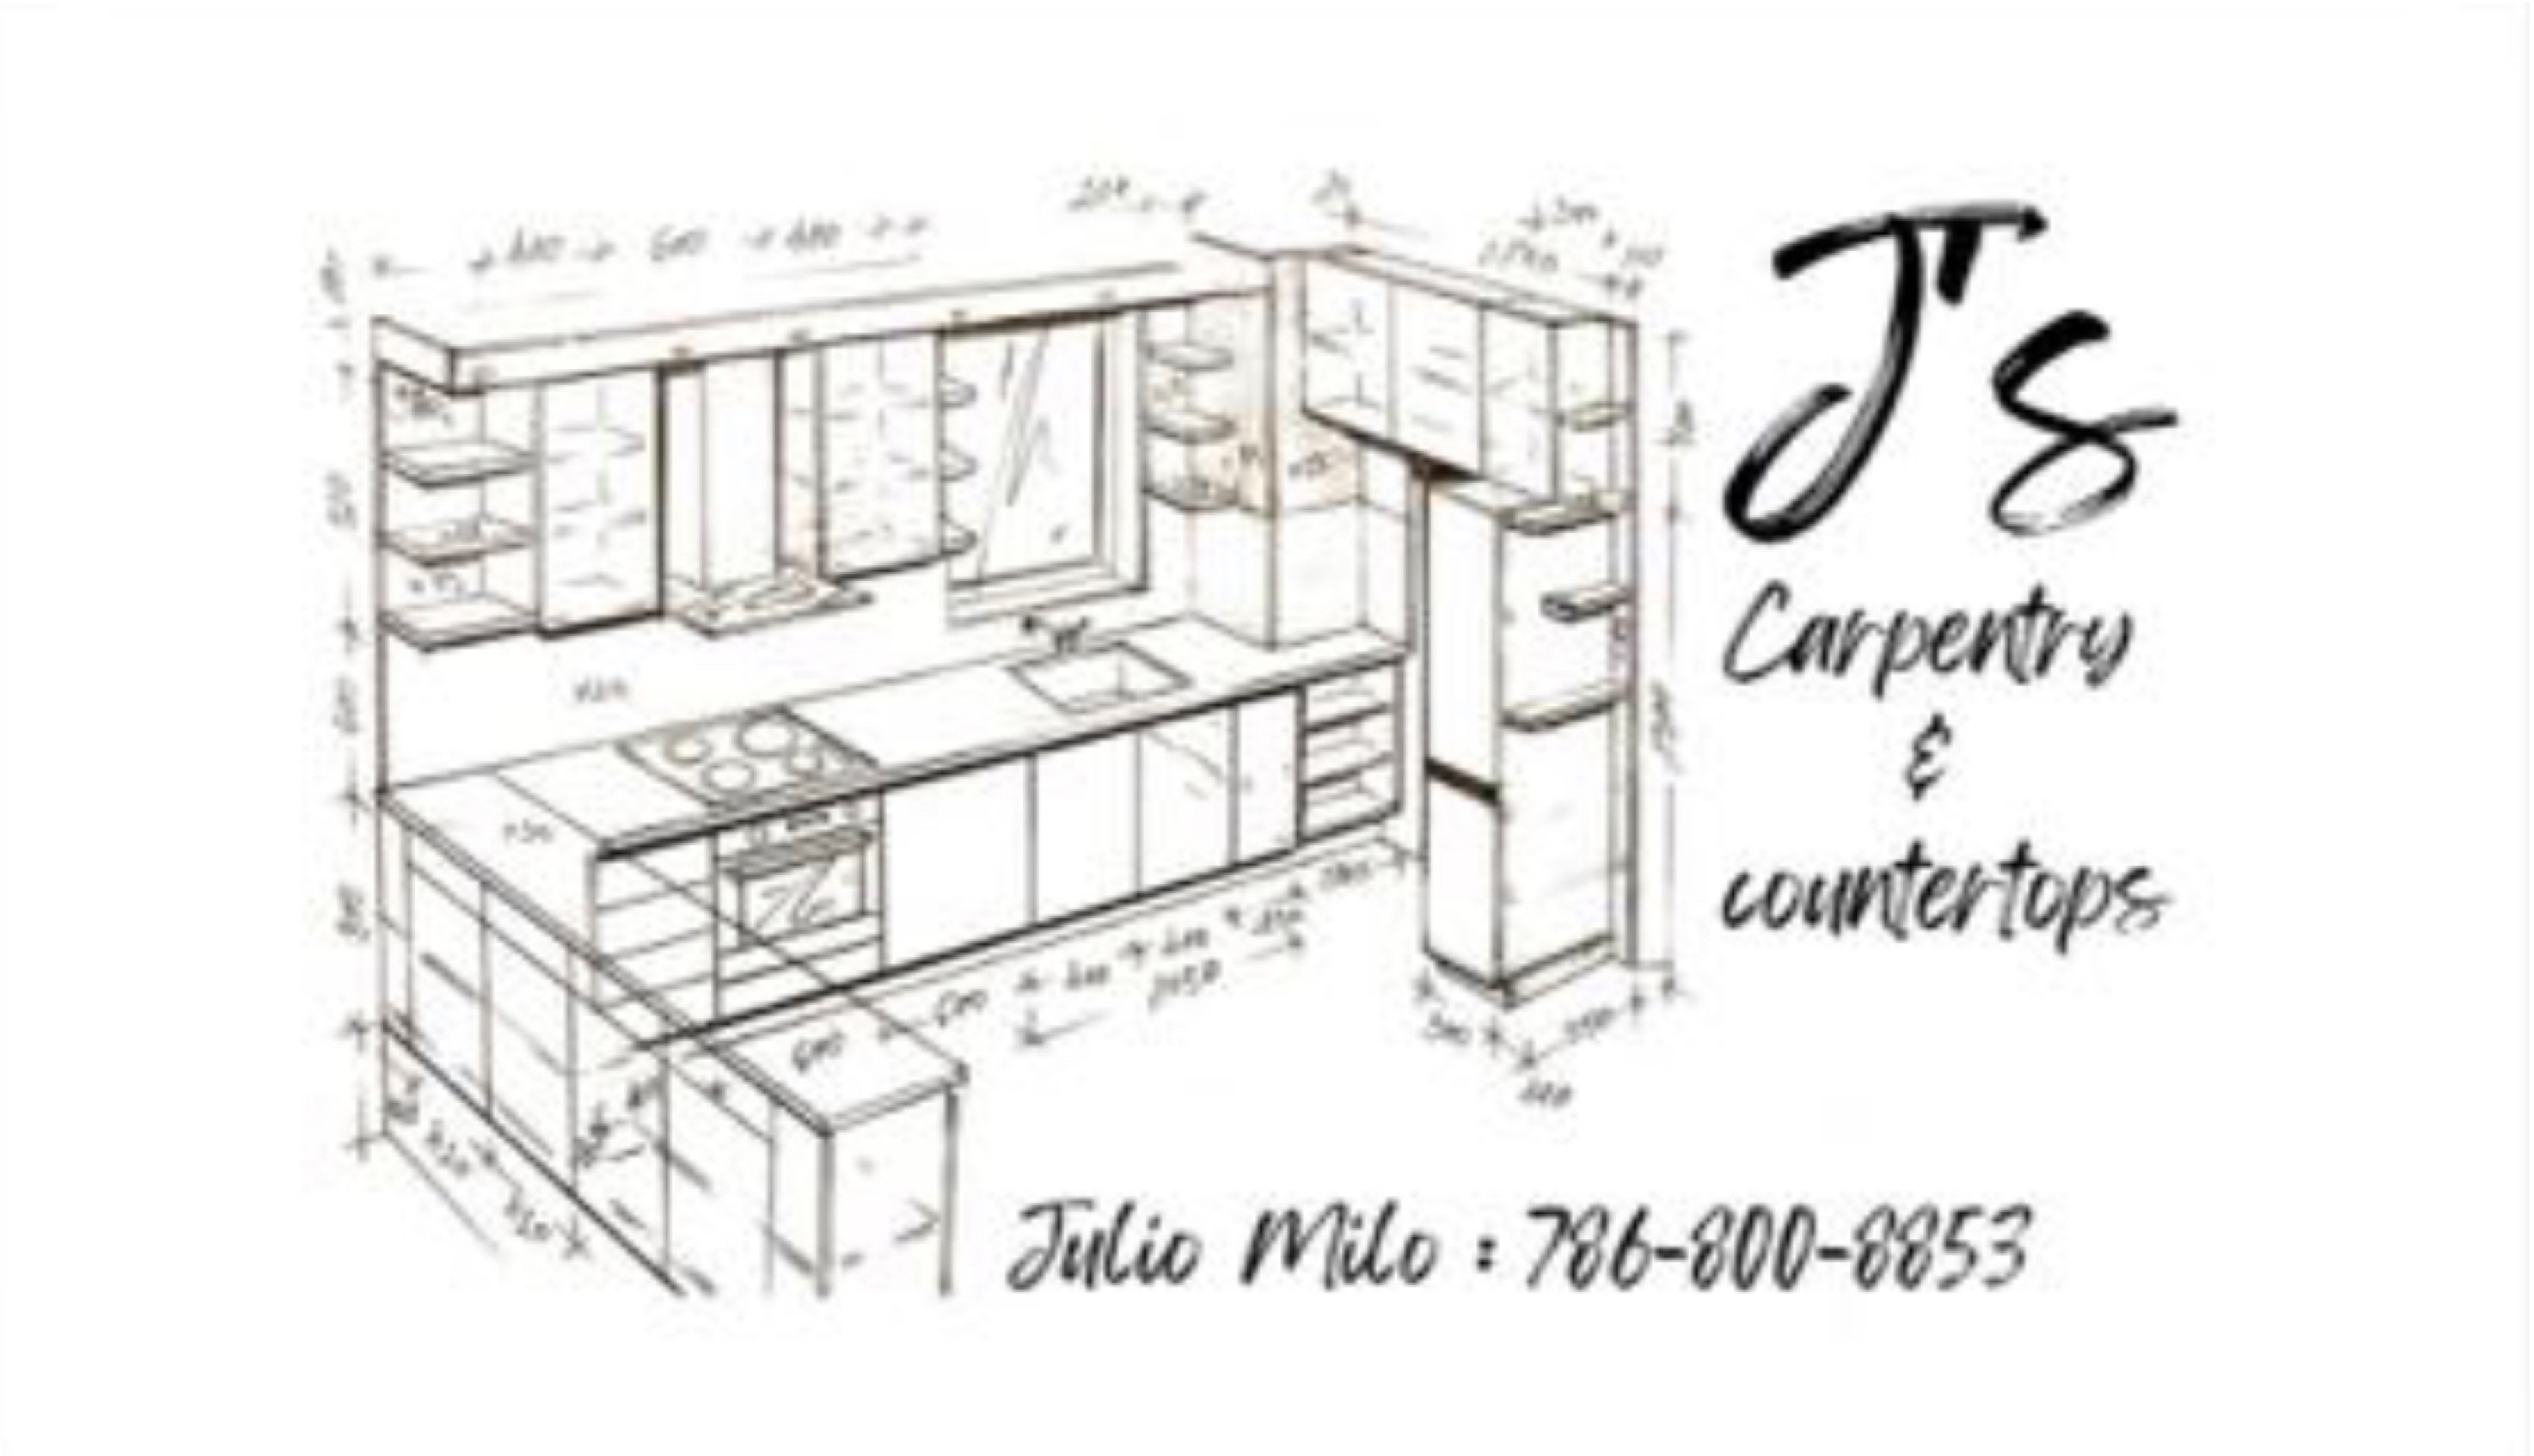 J's Carpentry and Countertops Logo